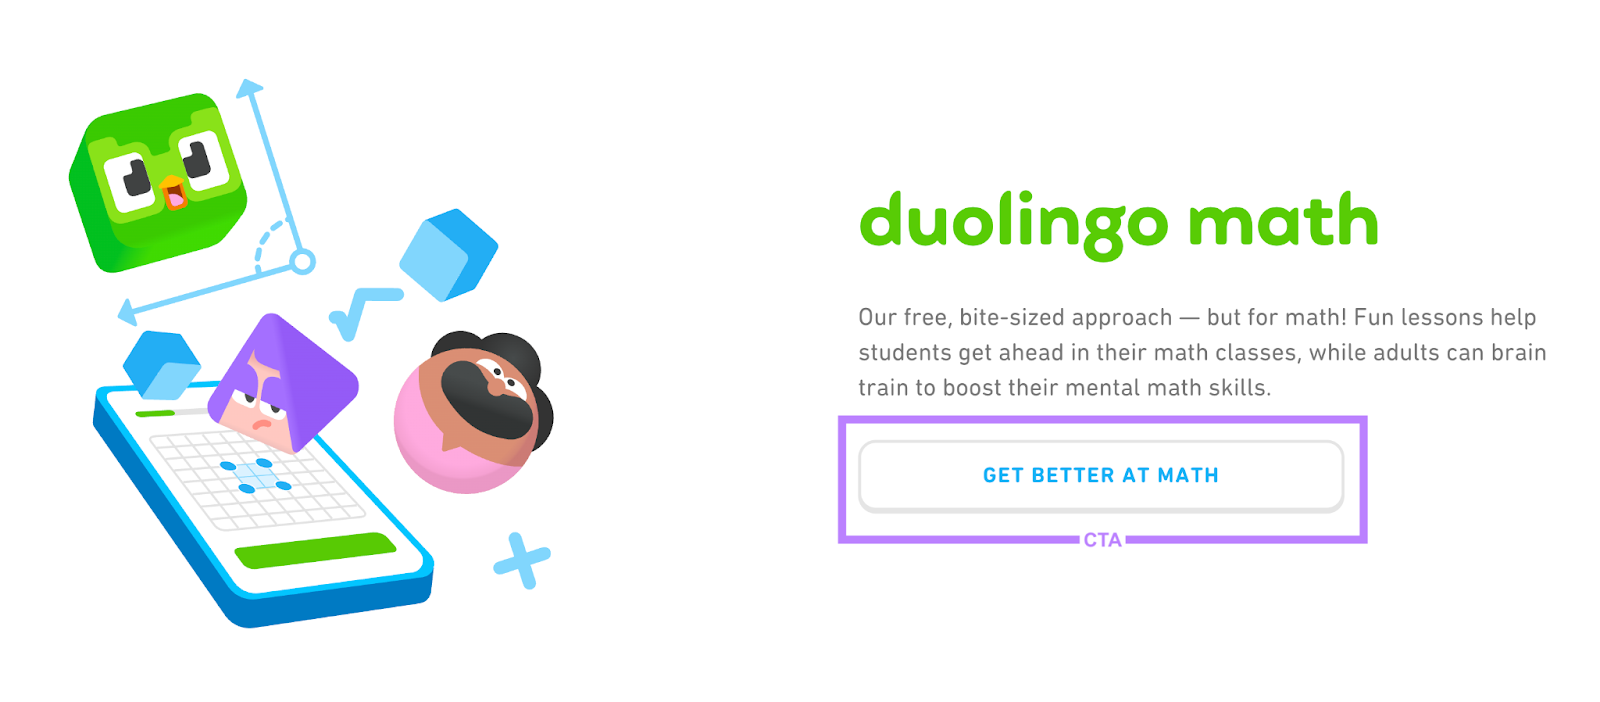 "Get better at math" CTA on Duolingo's math site